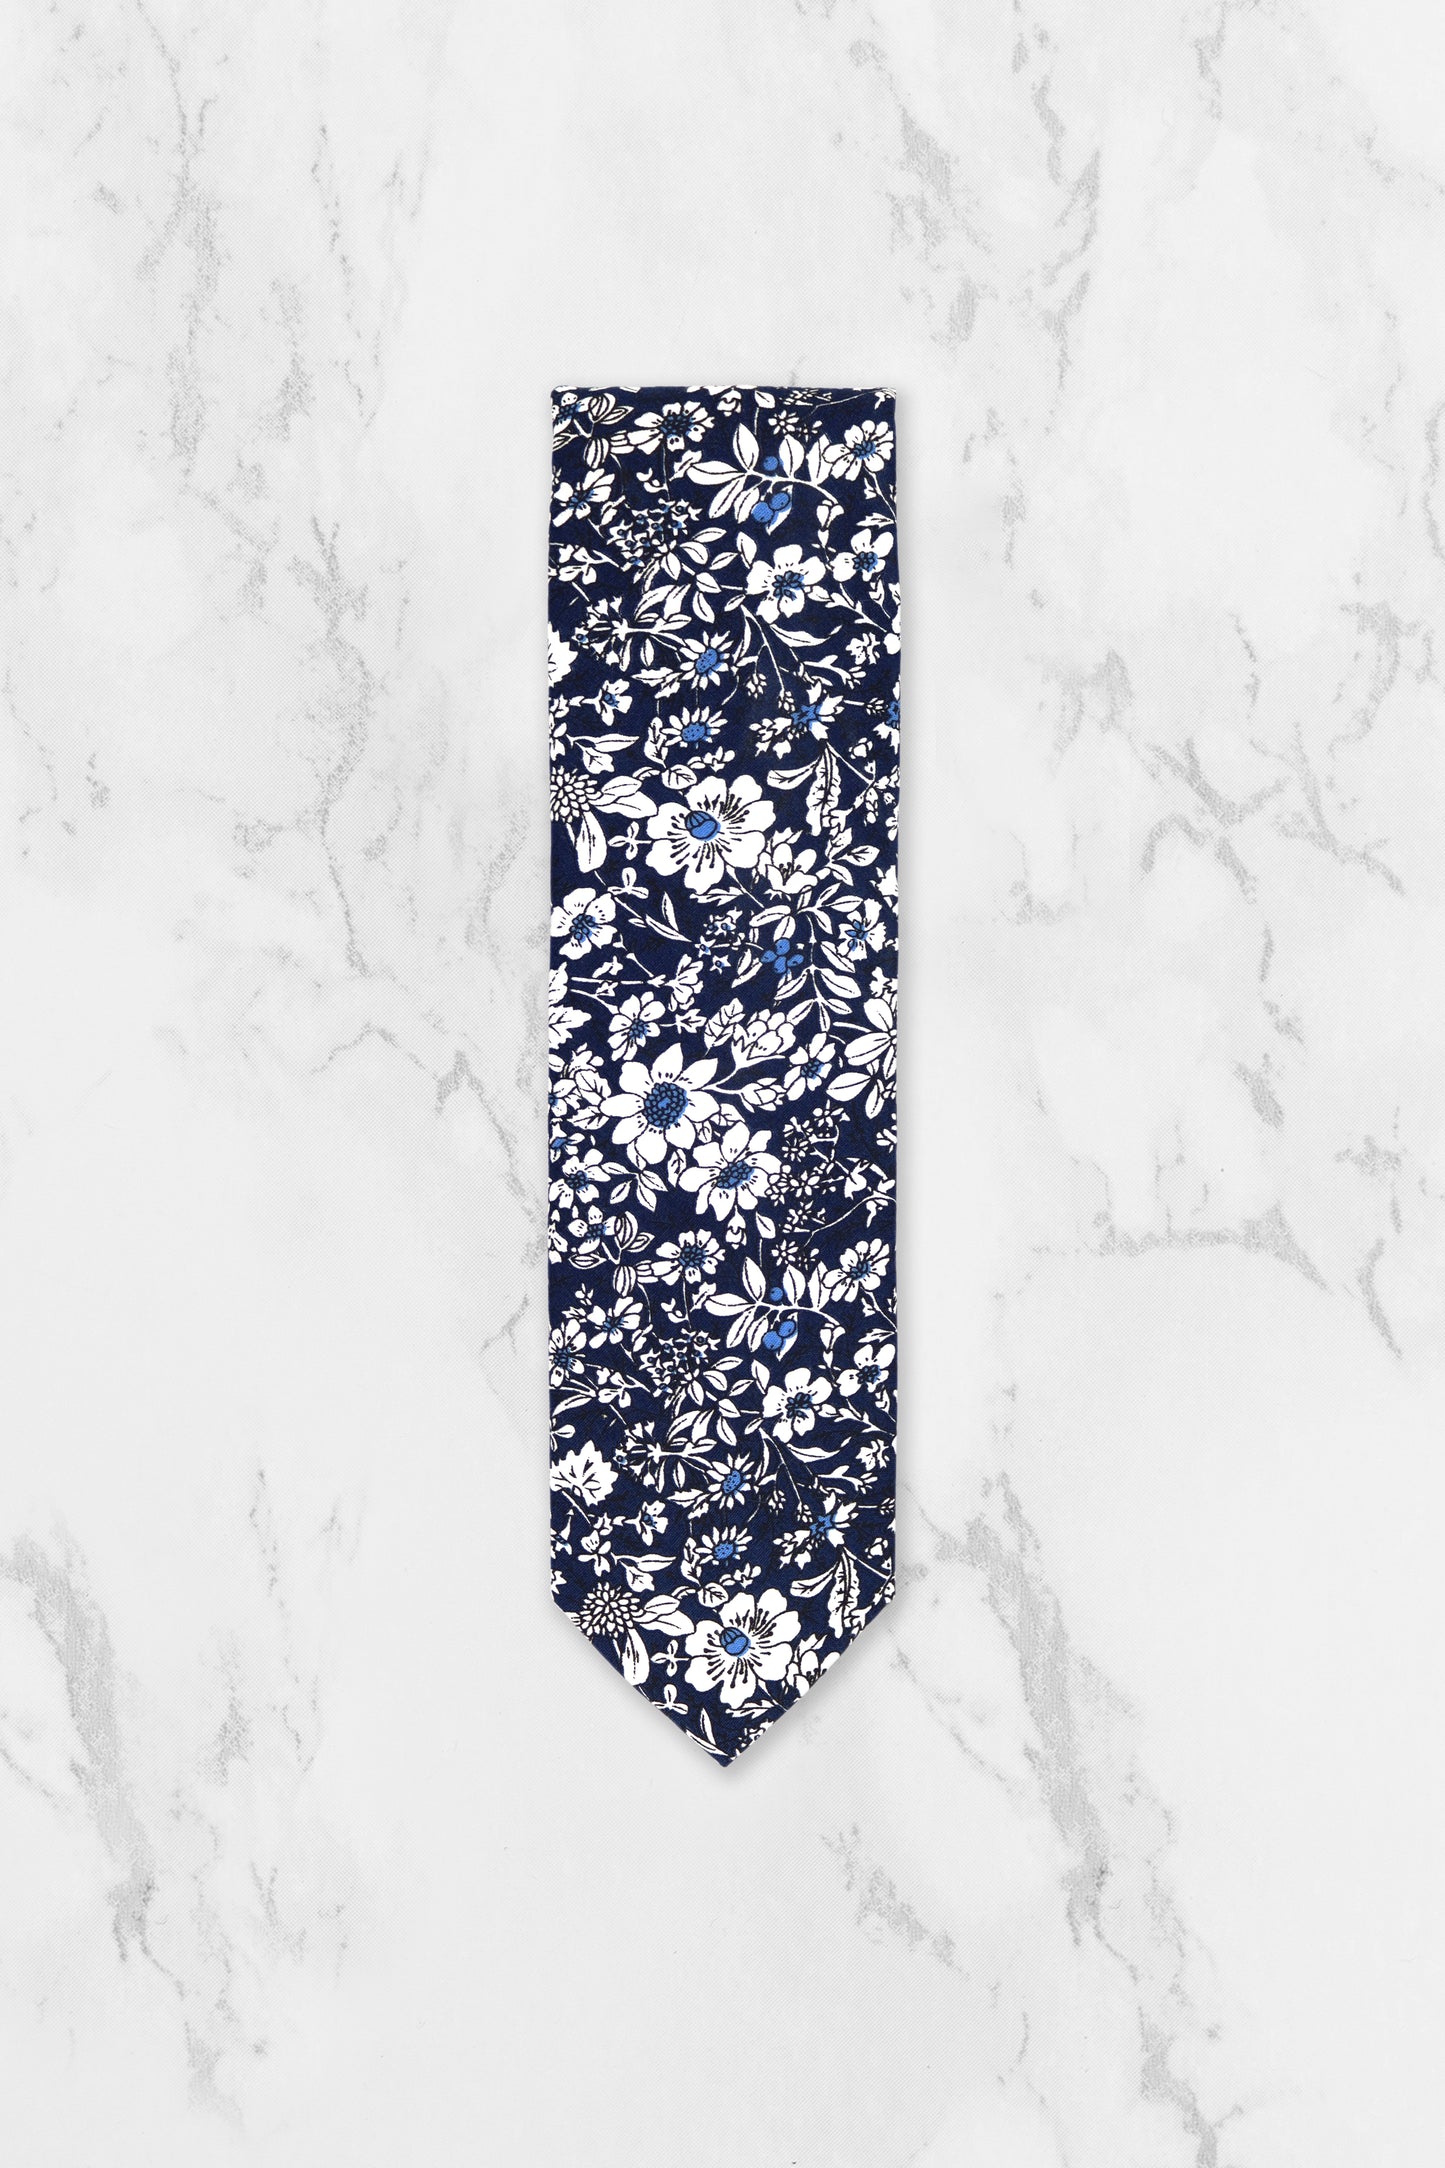 100% Cotton Floral Print Bow Tie - Navy Blue & White